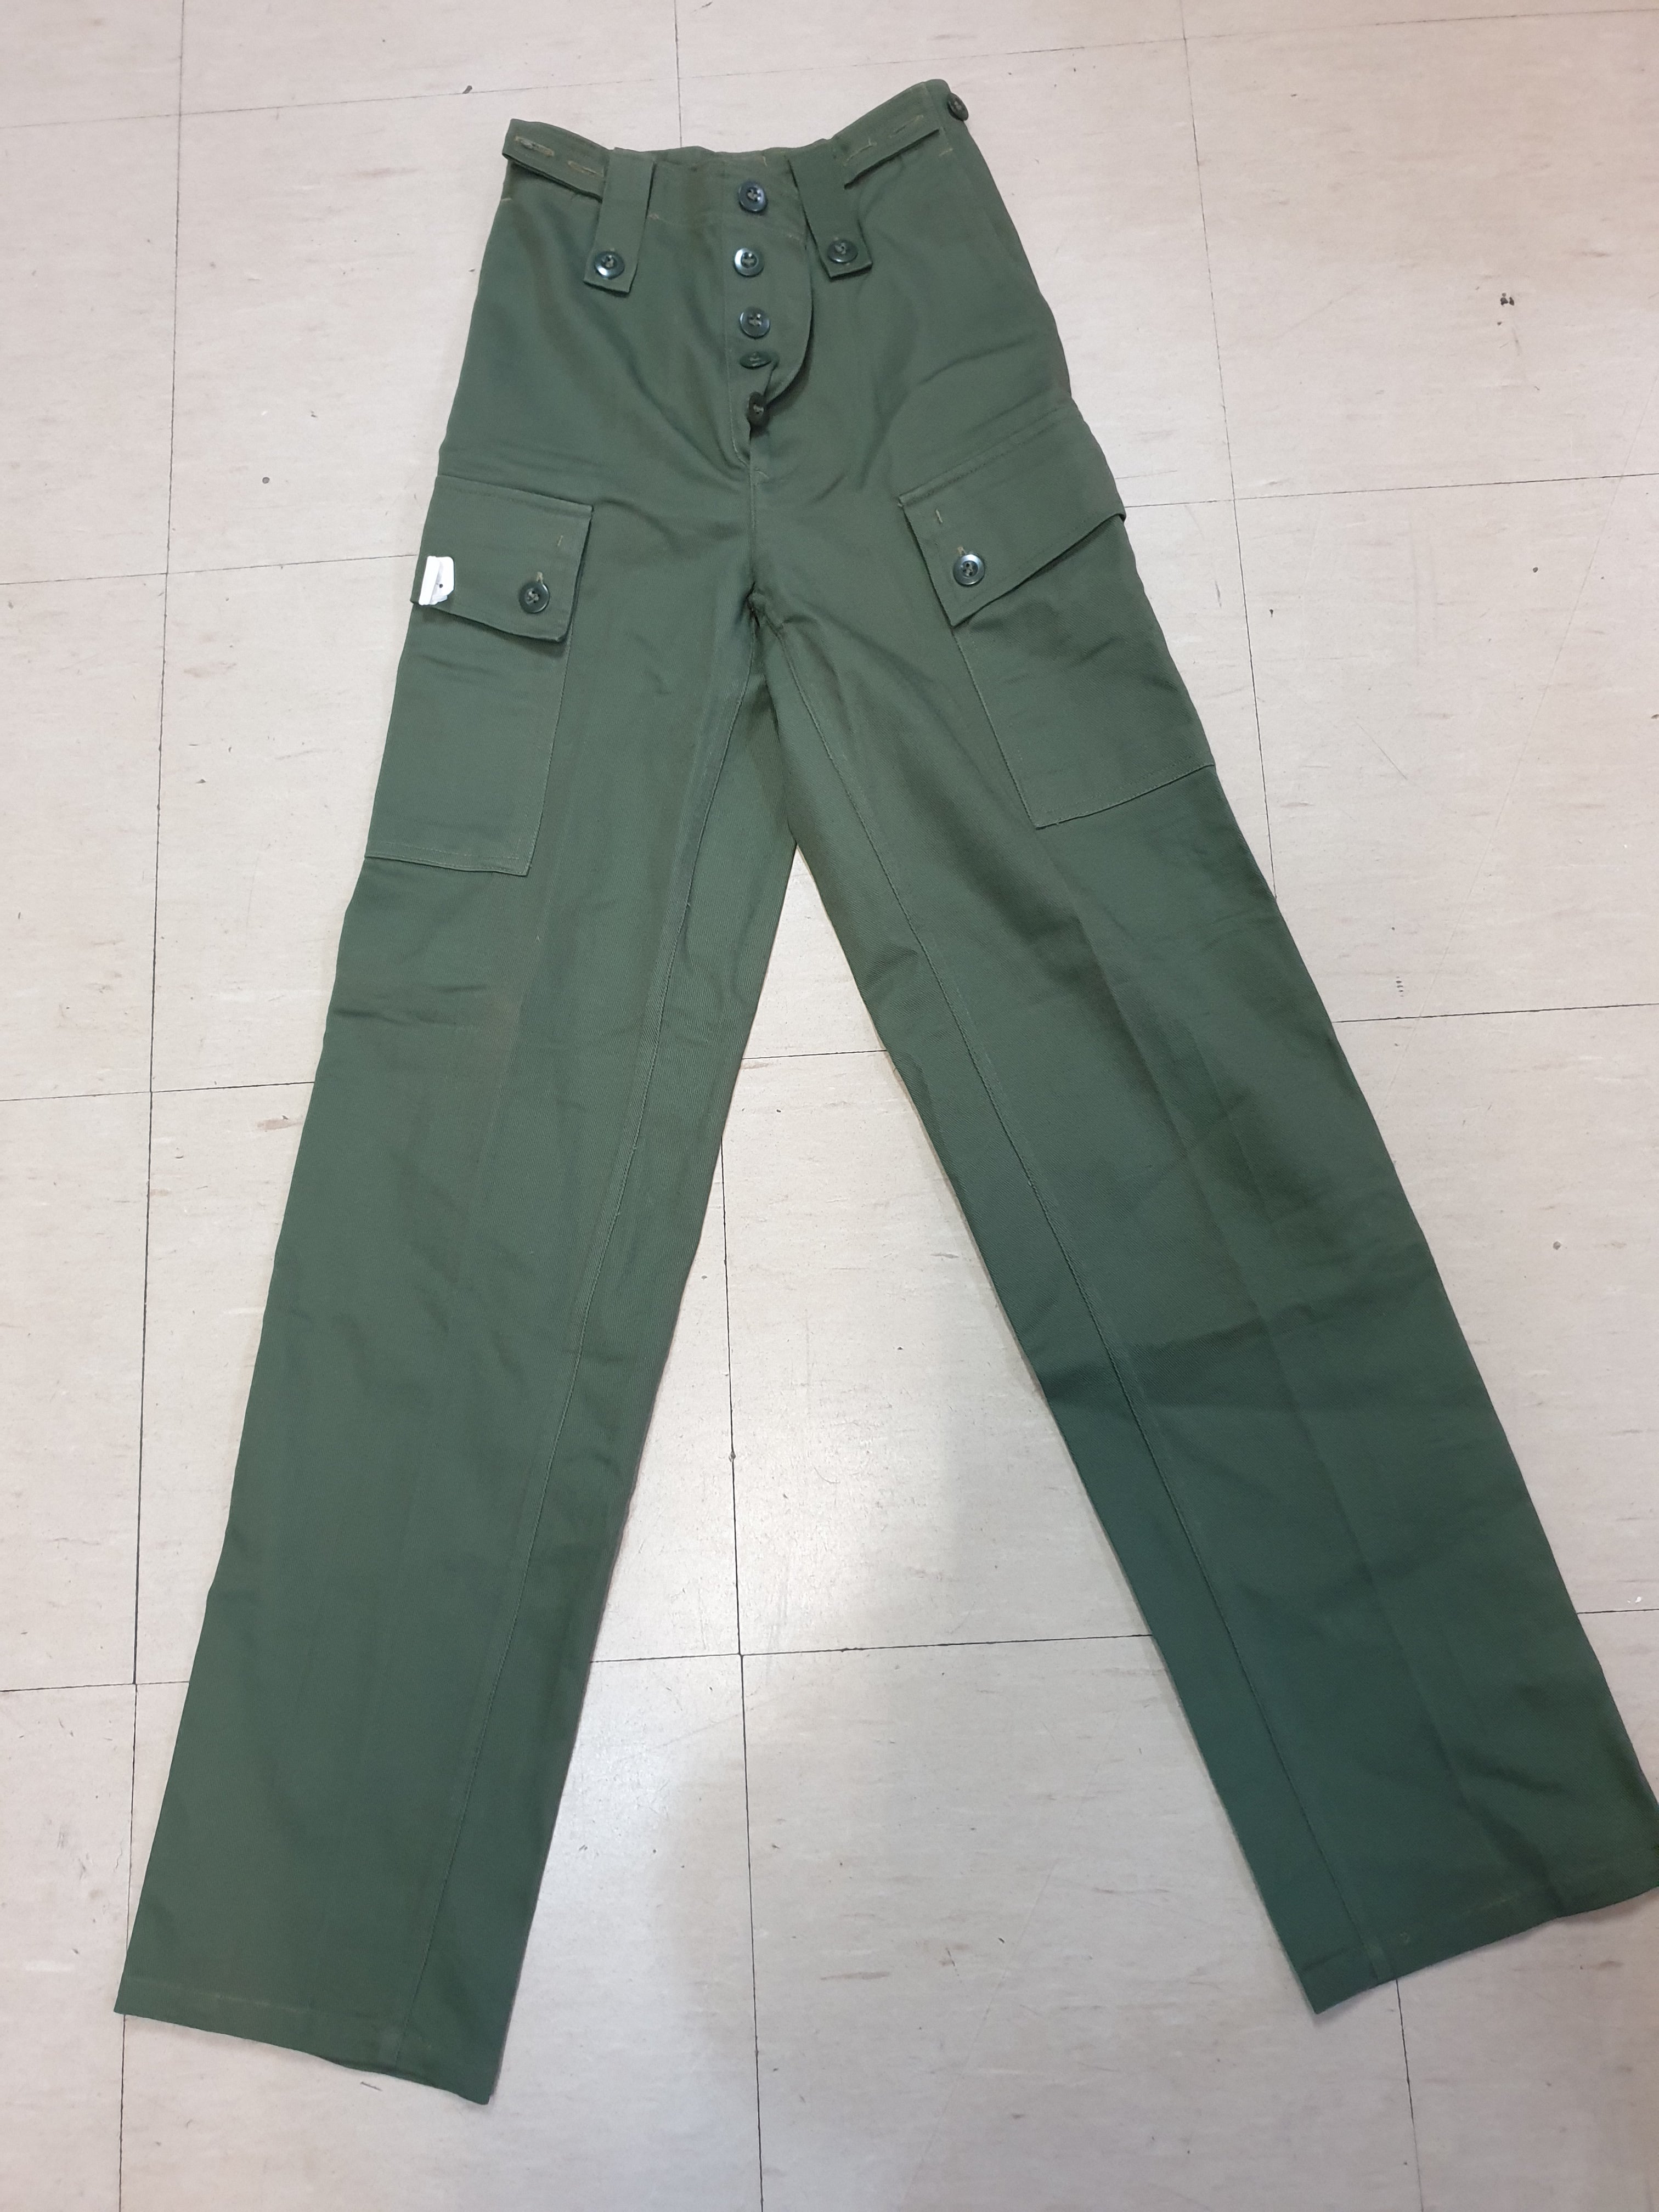 Army Style Pants - 55cm waist – Byron Bay Camping & Disposals